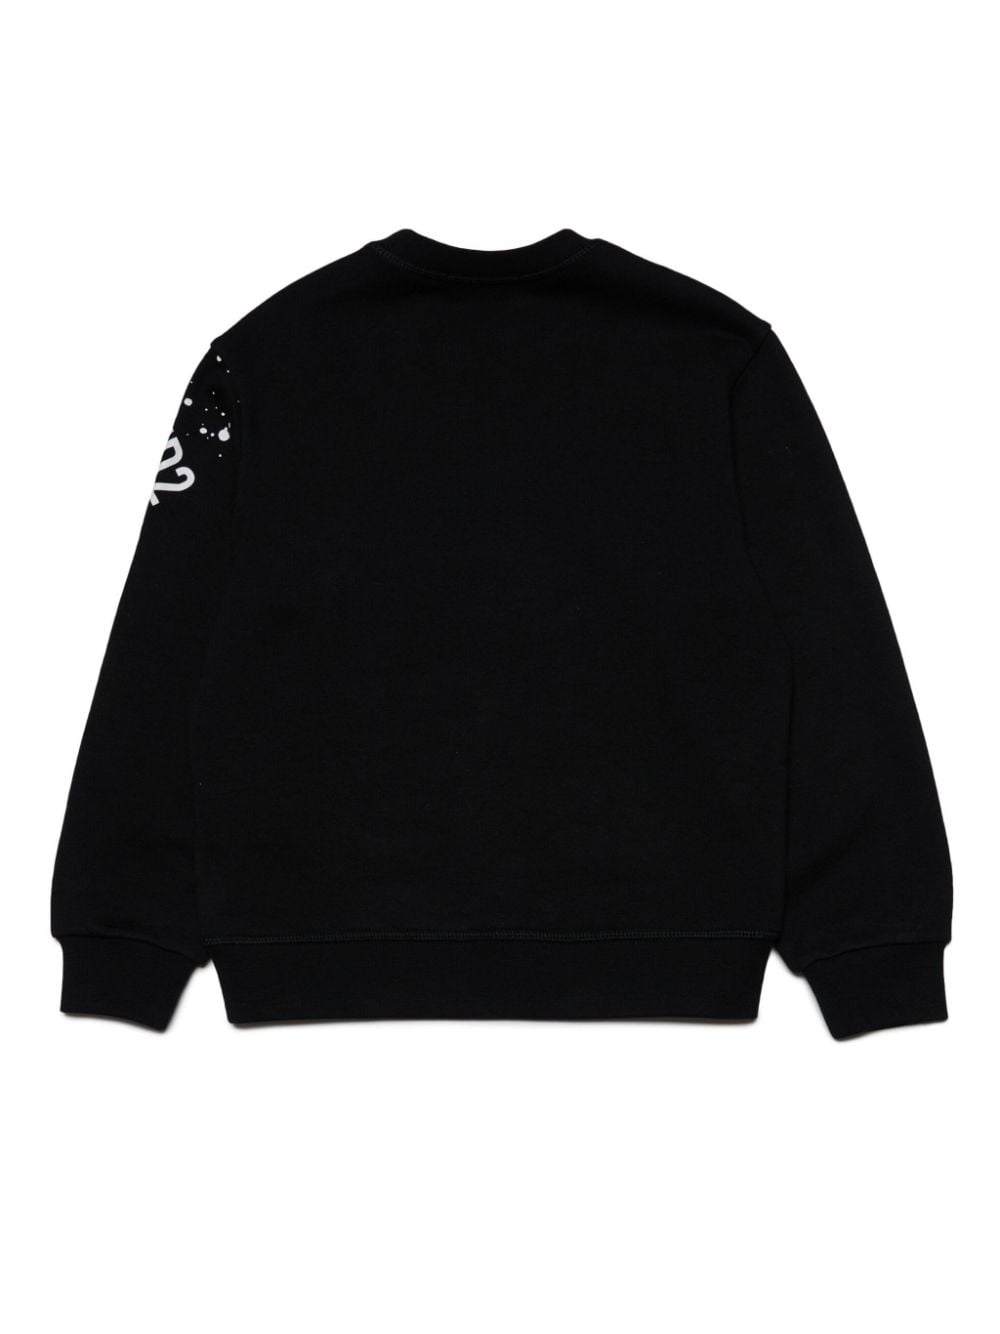 Black sweatshirt for boys with ICON logo